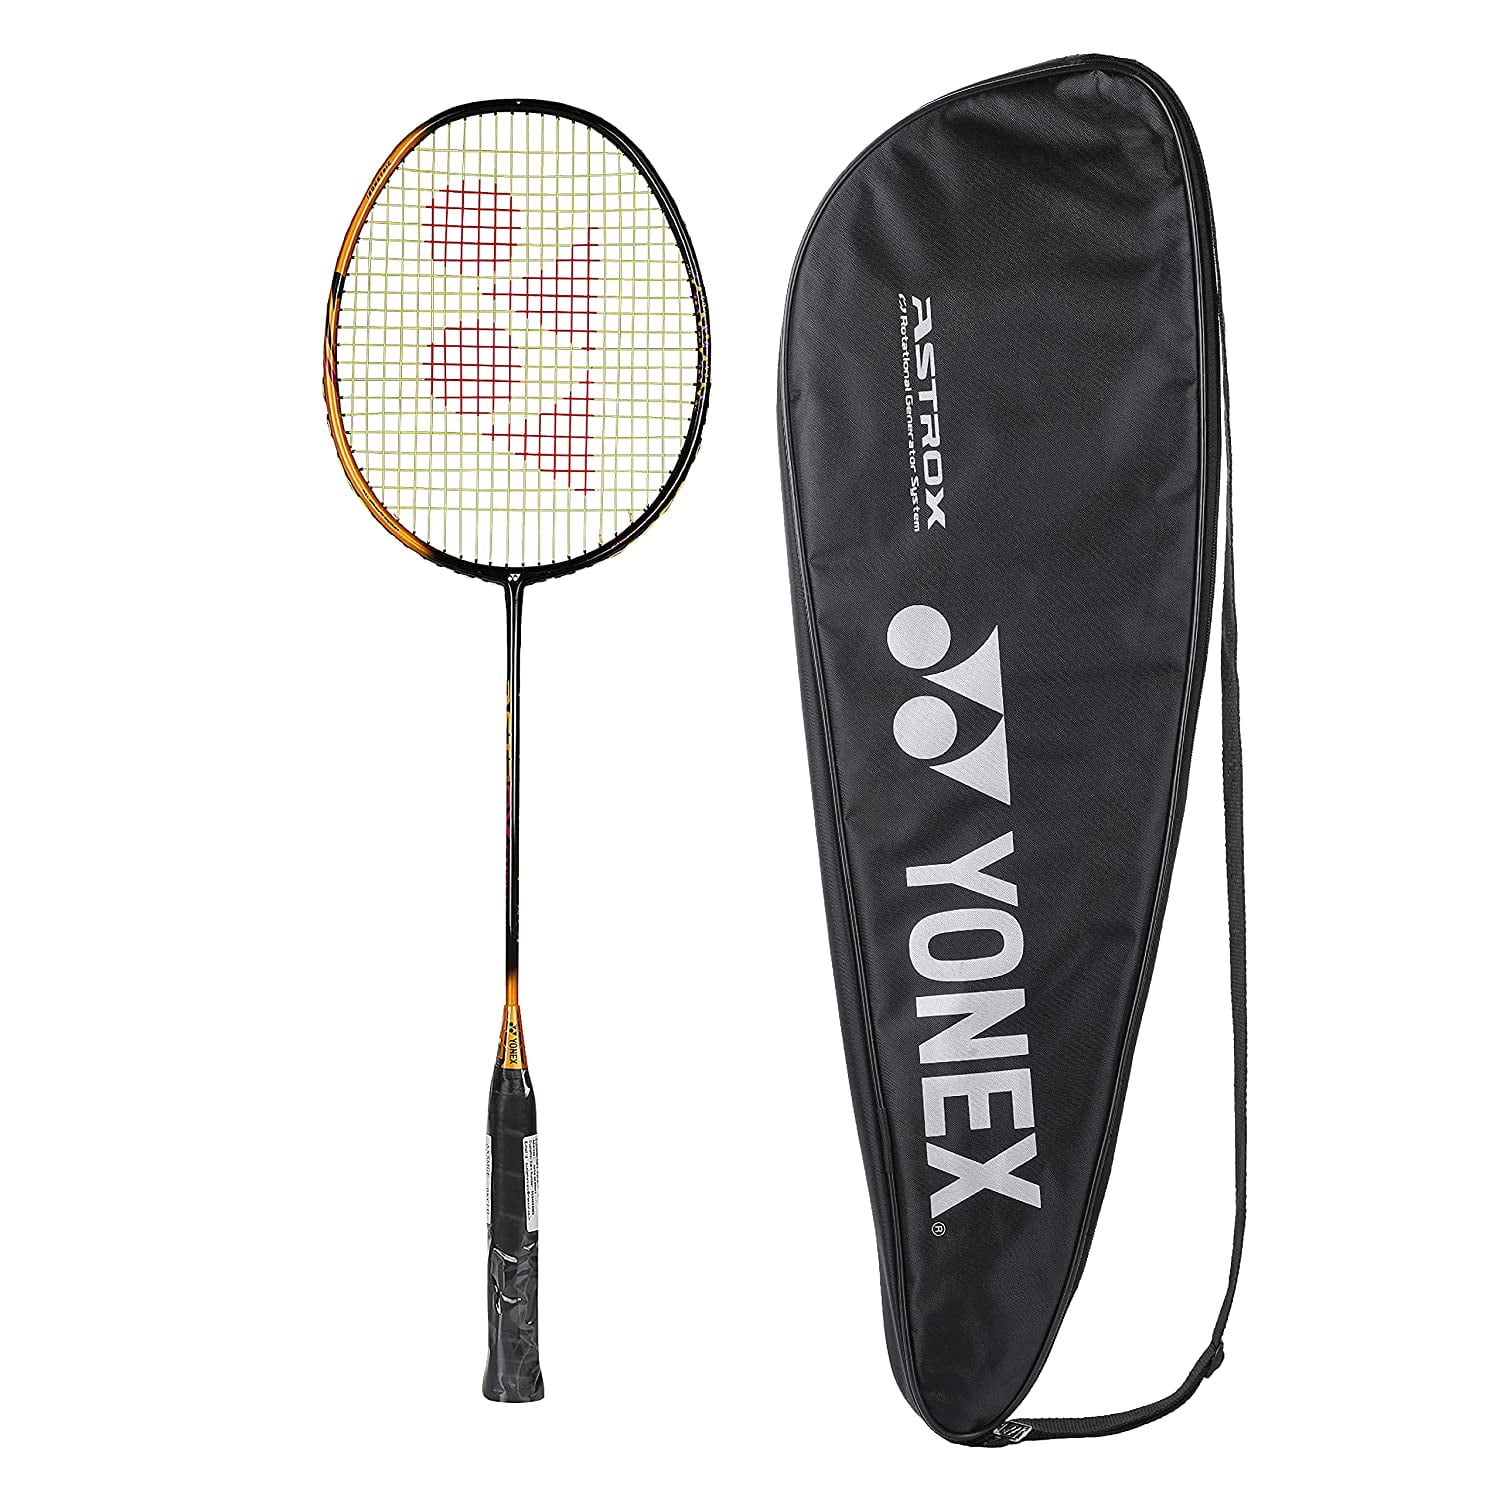 YONEX Smash Badminton Racquet (G4, 73 Grams, 28 lbs Tension), Black Orange 